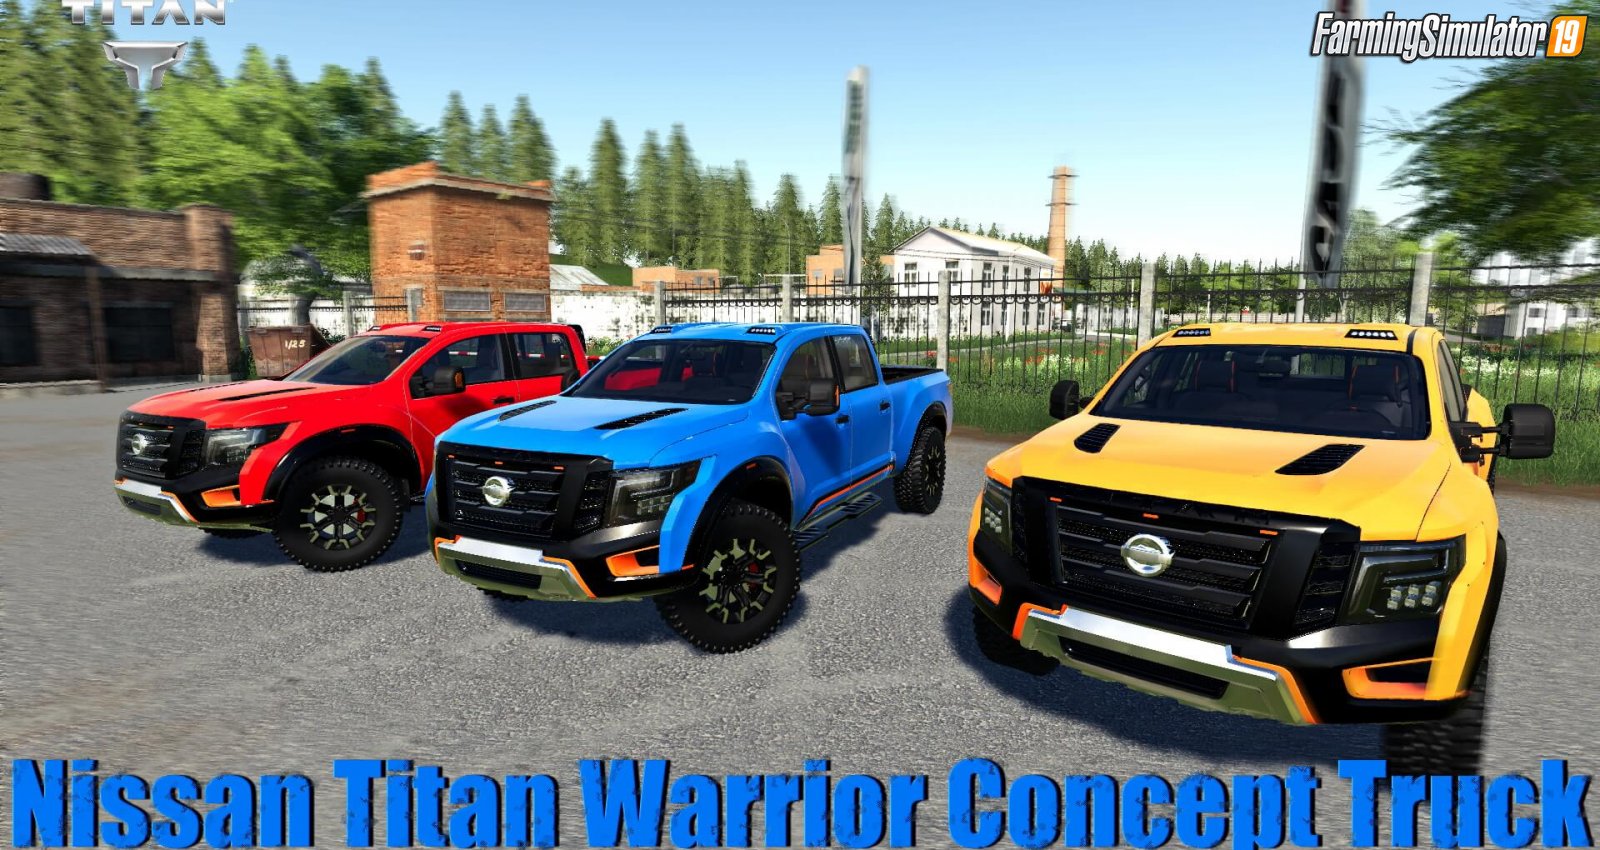 Nissan Titan Warrior Concept Truck for FS19